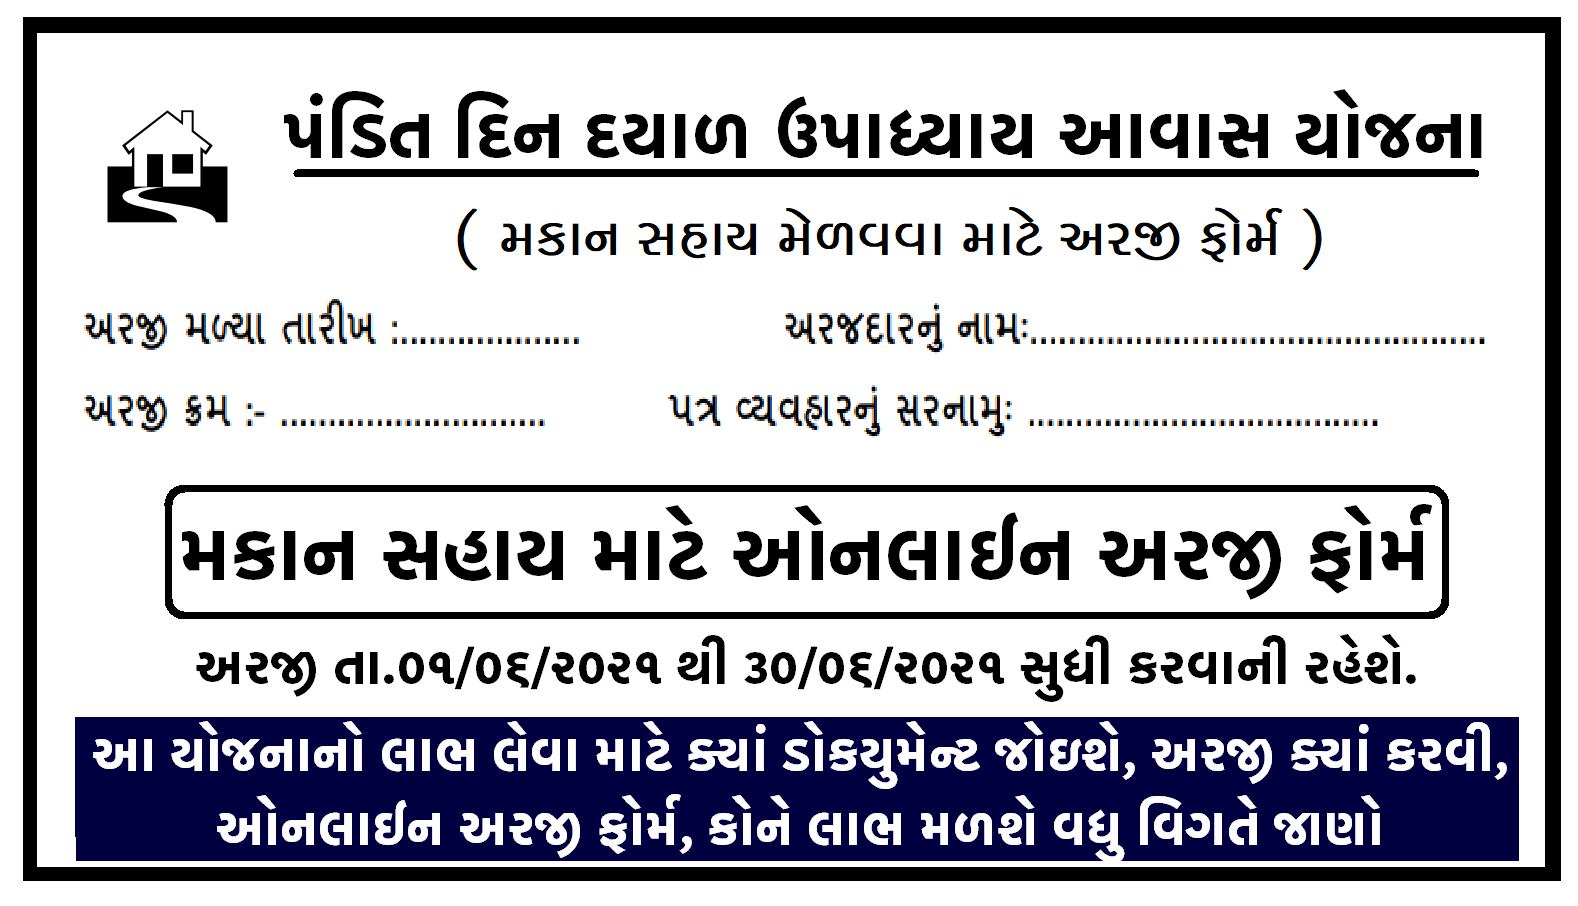 Gujarat Makan Sahay Yojana: Pandit Din Dayal Upadhyay Awas Yojana 2021-22